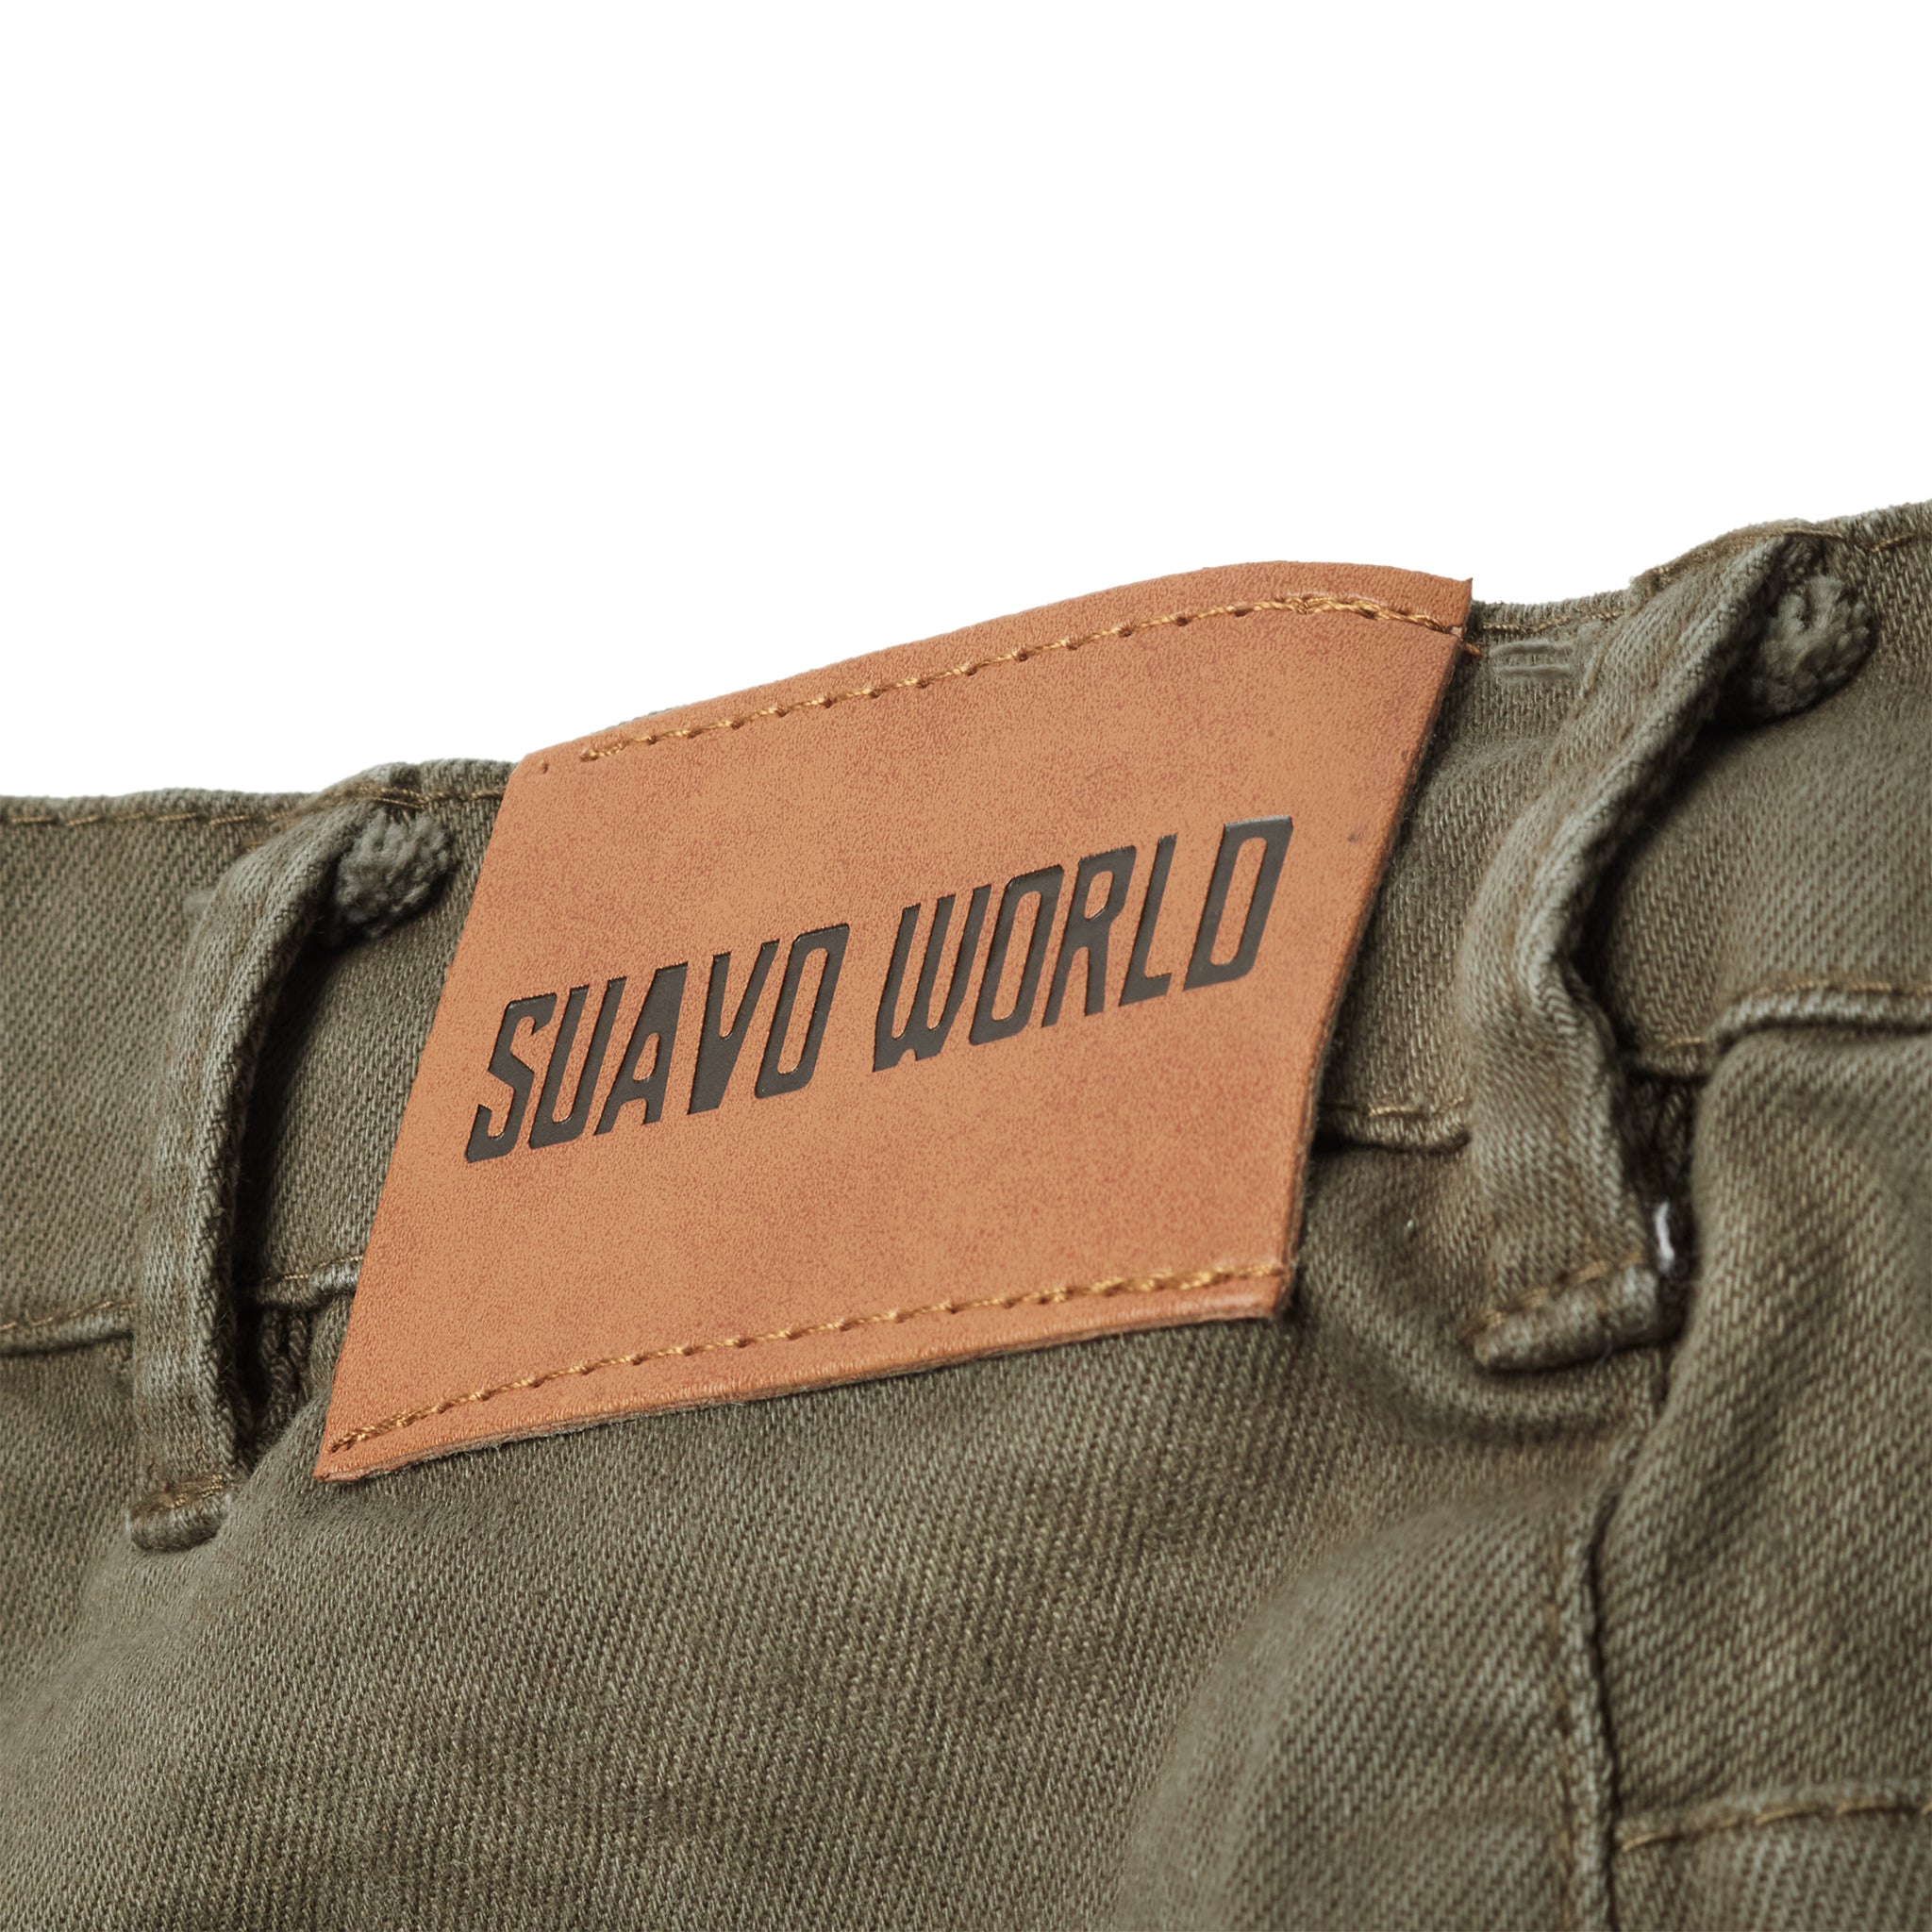 Logo view of Suavo World Flare Denim Khaki